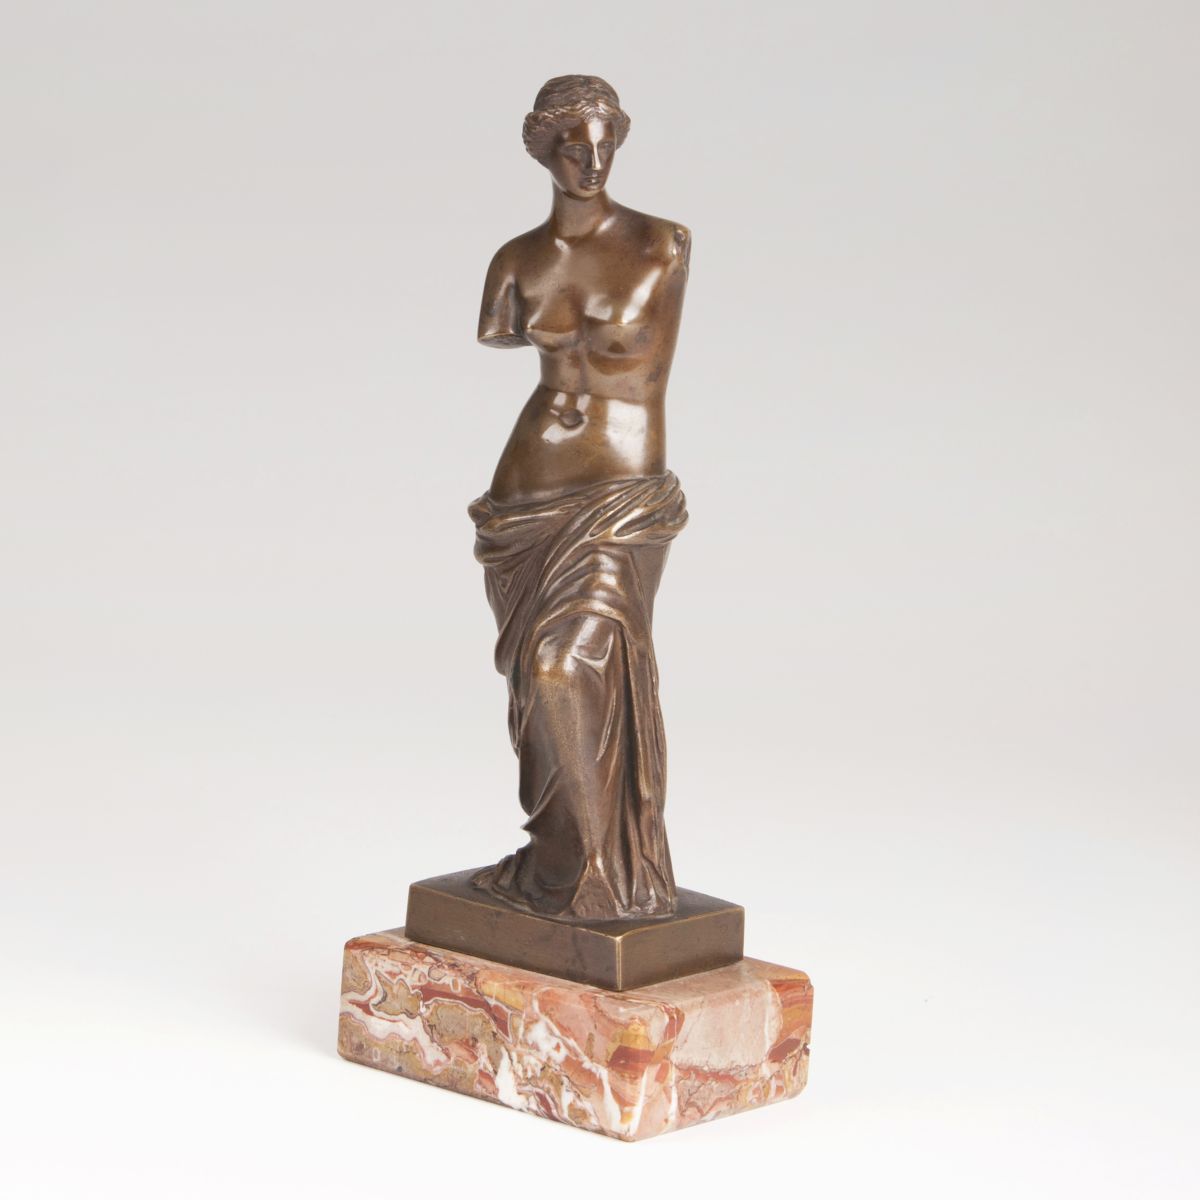 A small Bronze Figure 'Venus of Milo' after antique model